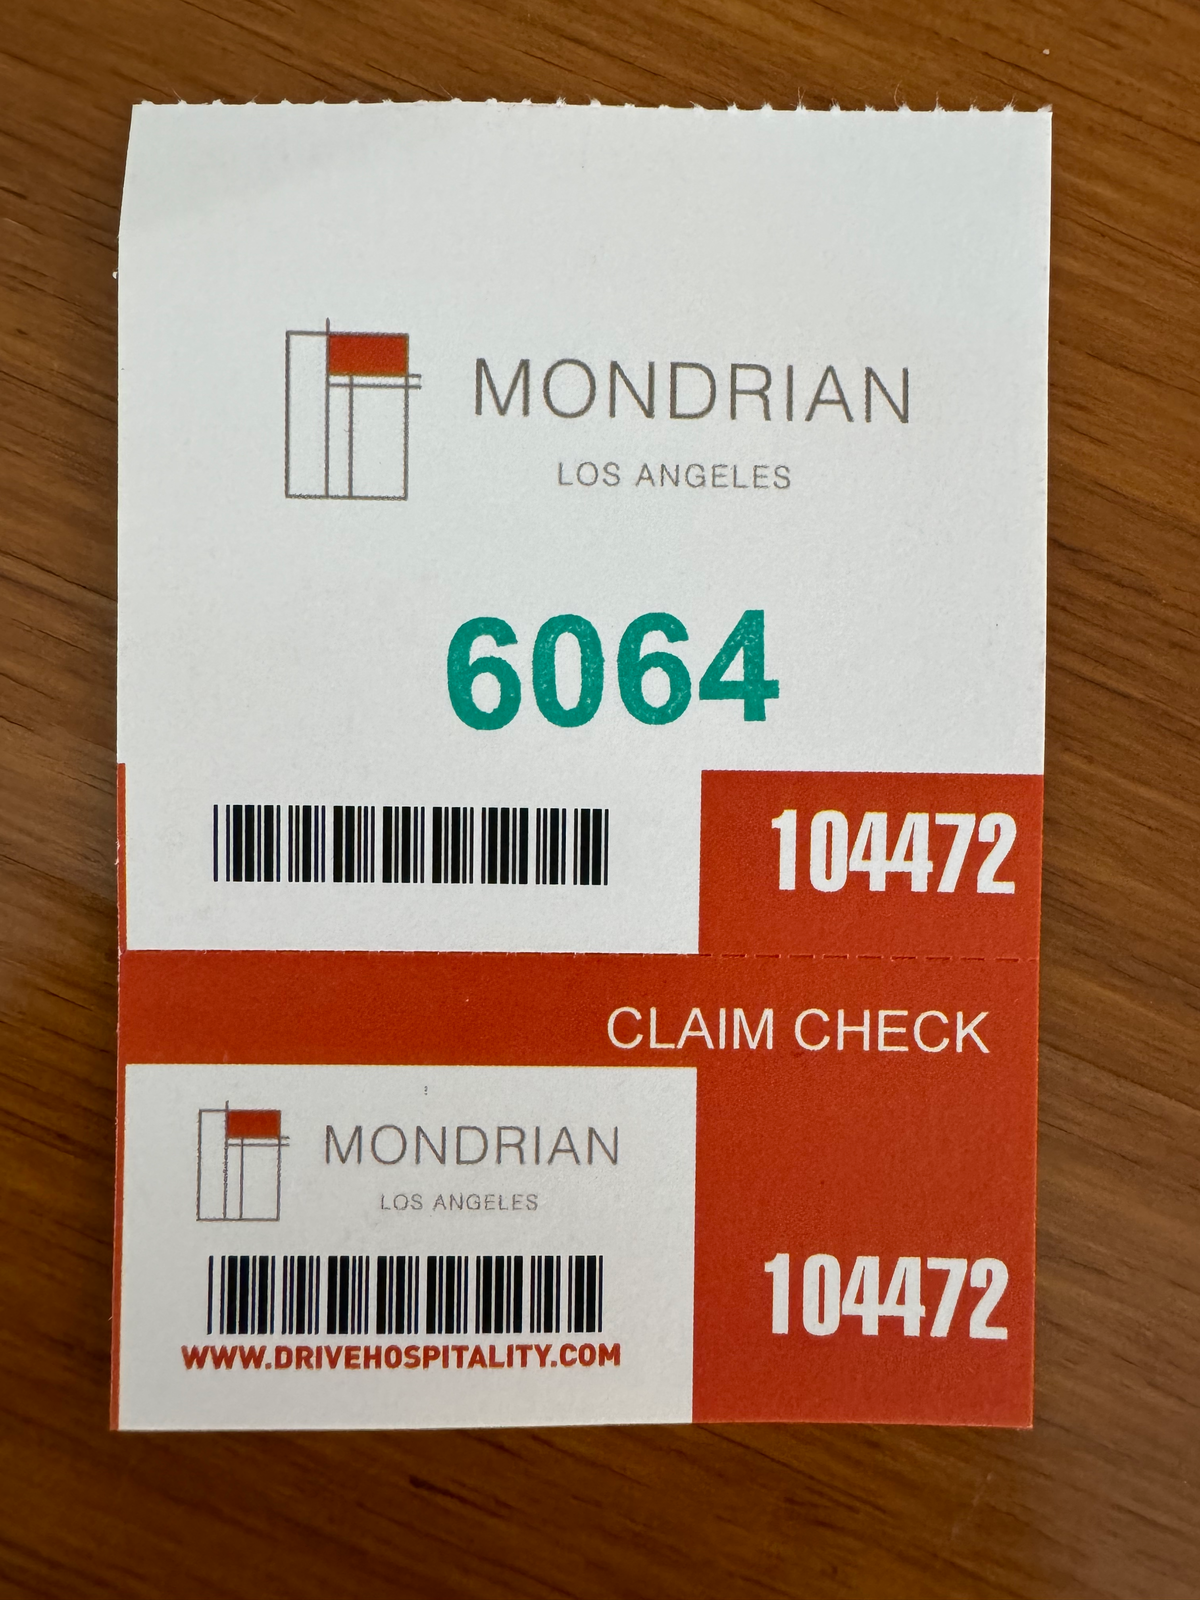 Mondrian Los Angeles valet parking ticket